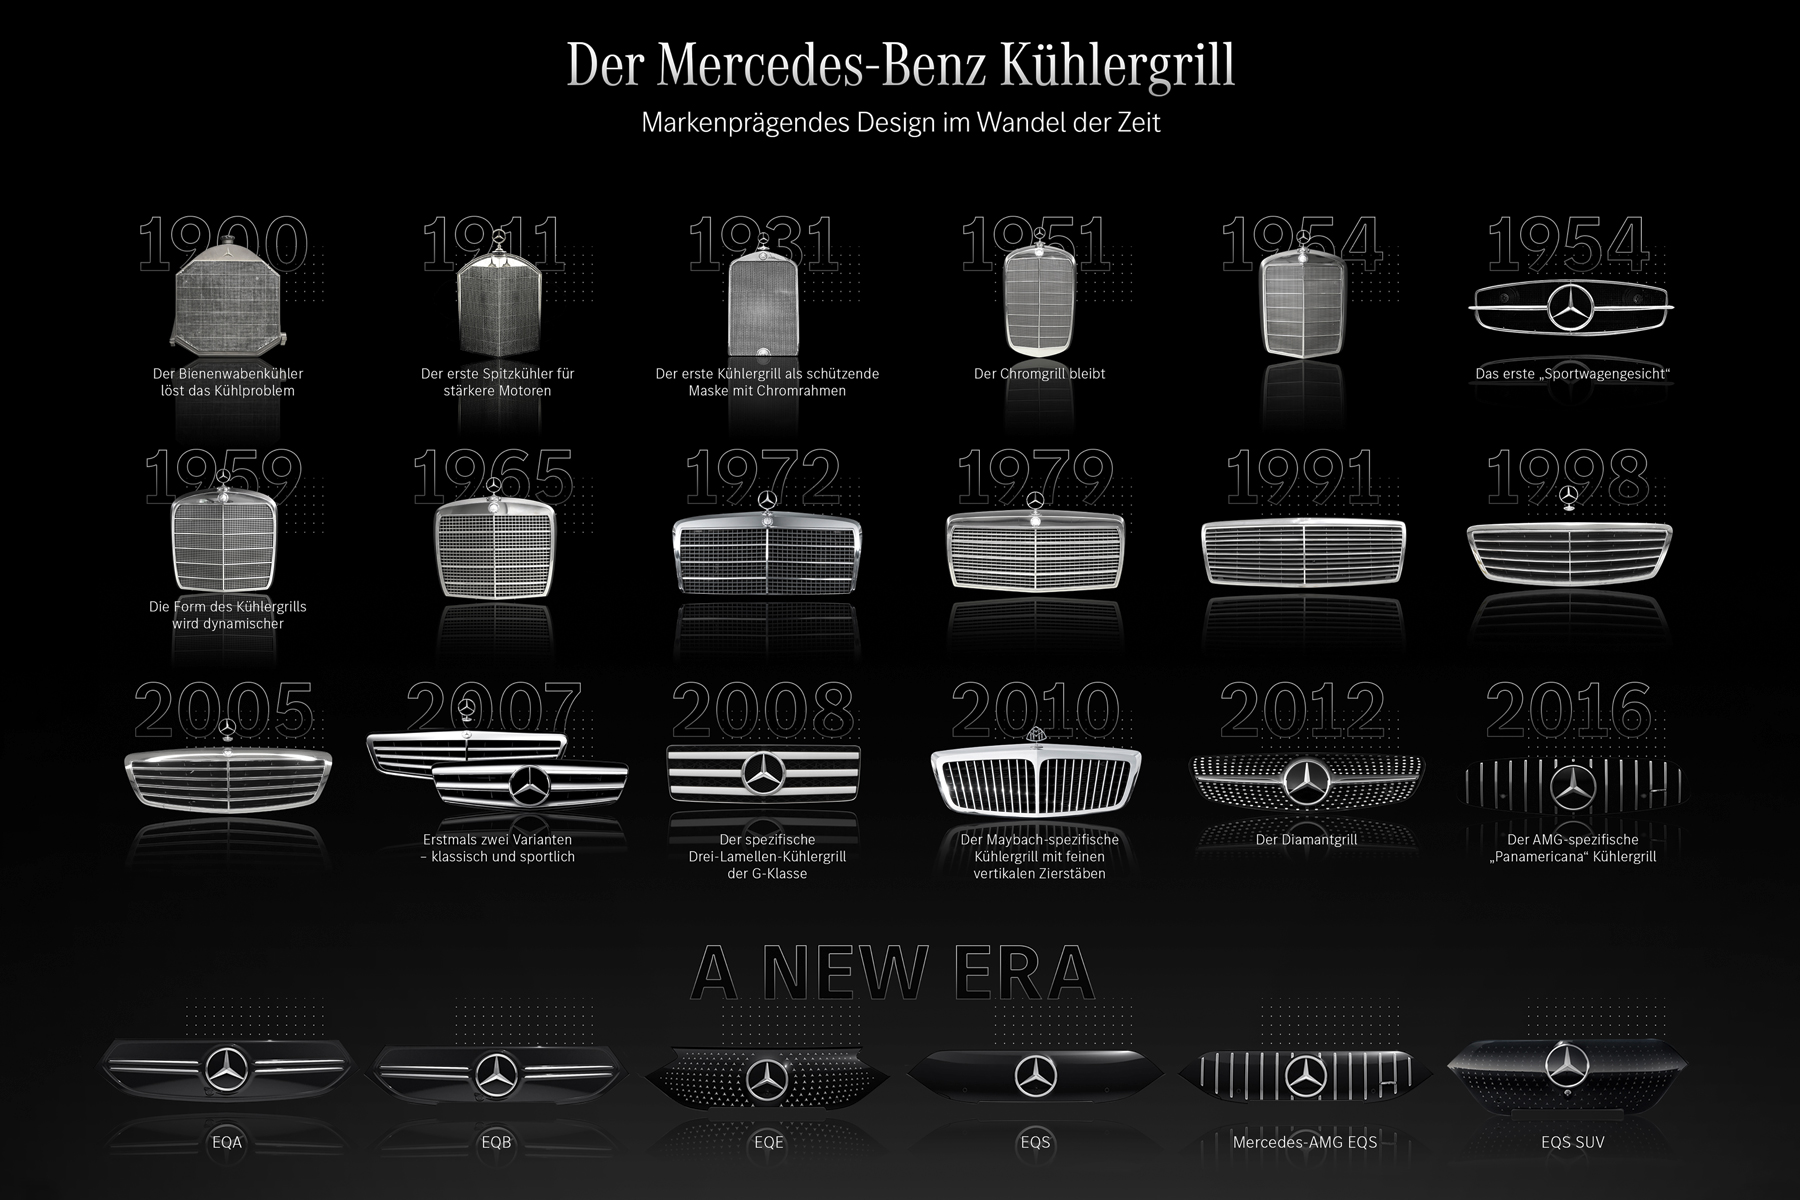 Mercedes-Benz เผยรายละเอียดแห่งประวัติศาสตร์การออกแบบกระจังหน้ารถตลอด 120 ปีที่ผ่านมา